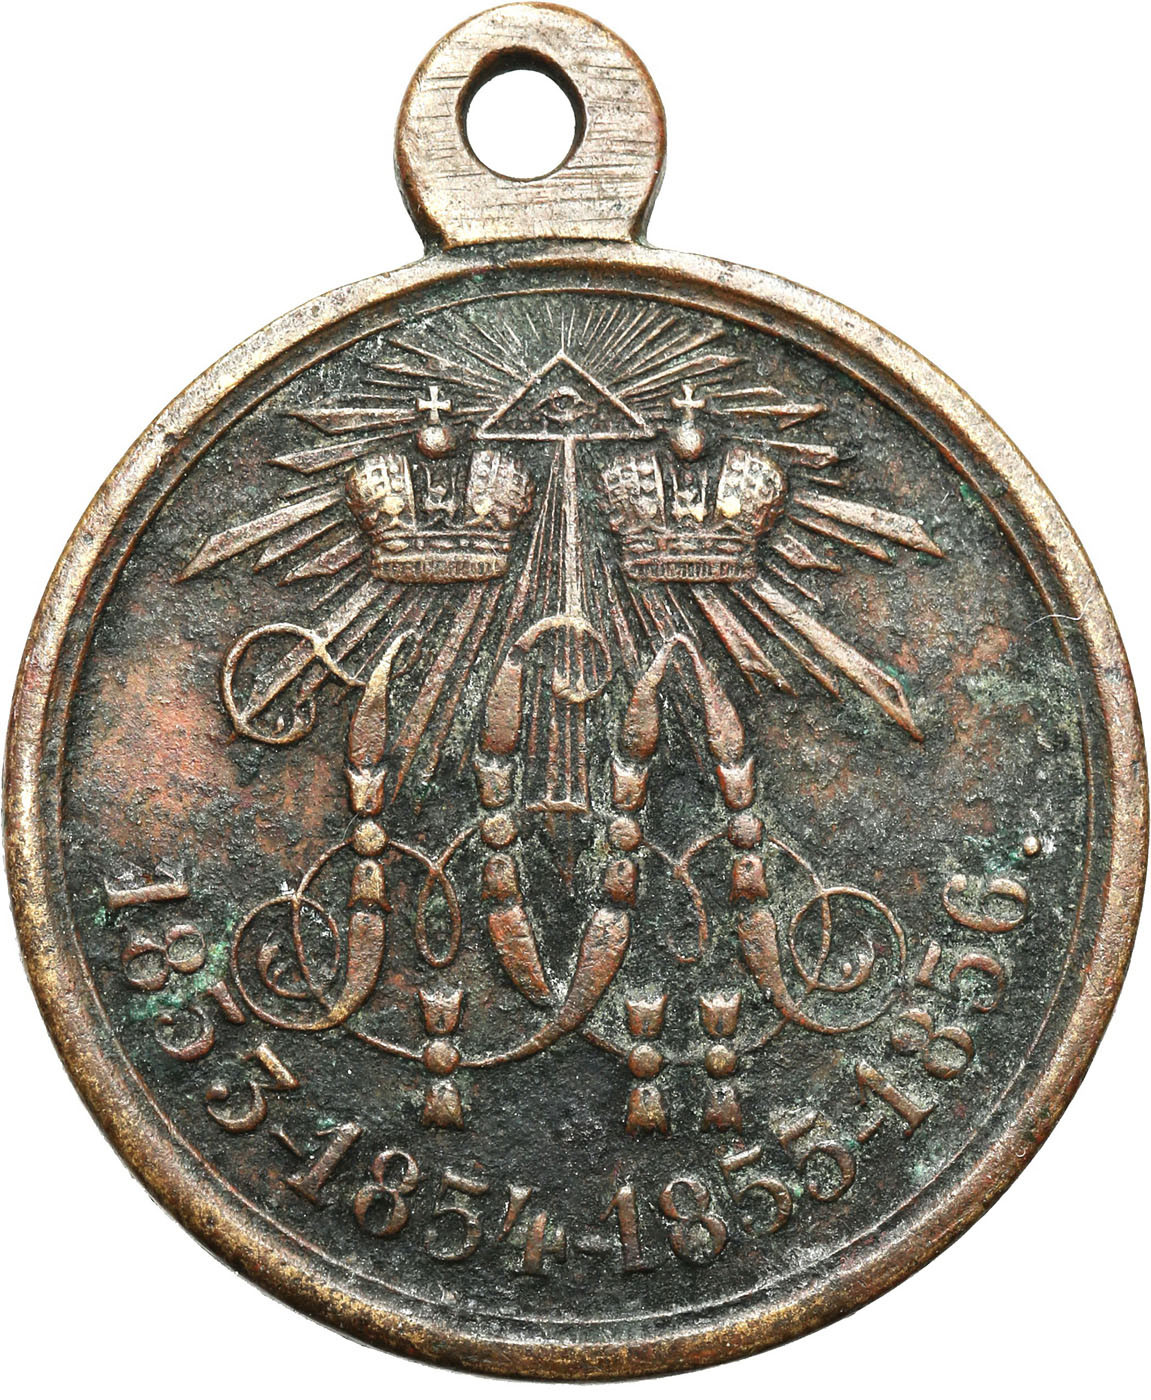 Rosja. Aleksander II. Medal za wojnę krymską 1853-1856